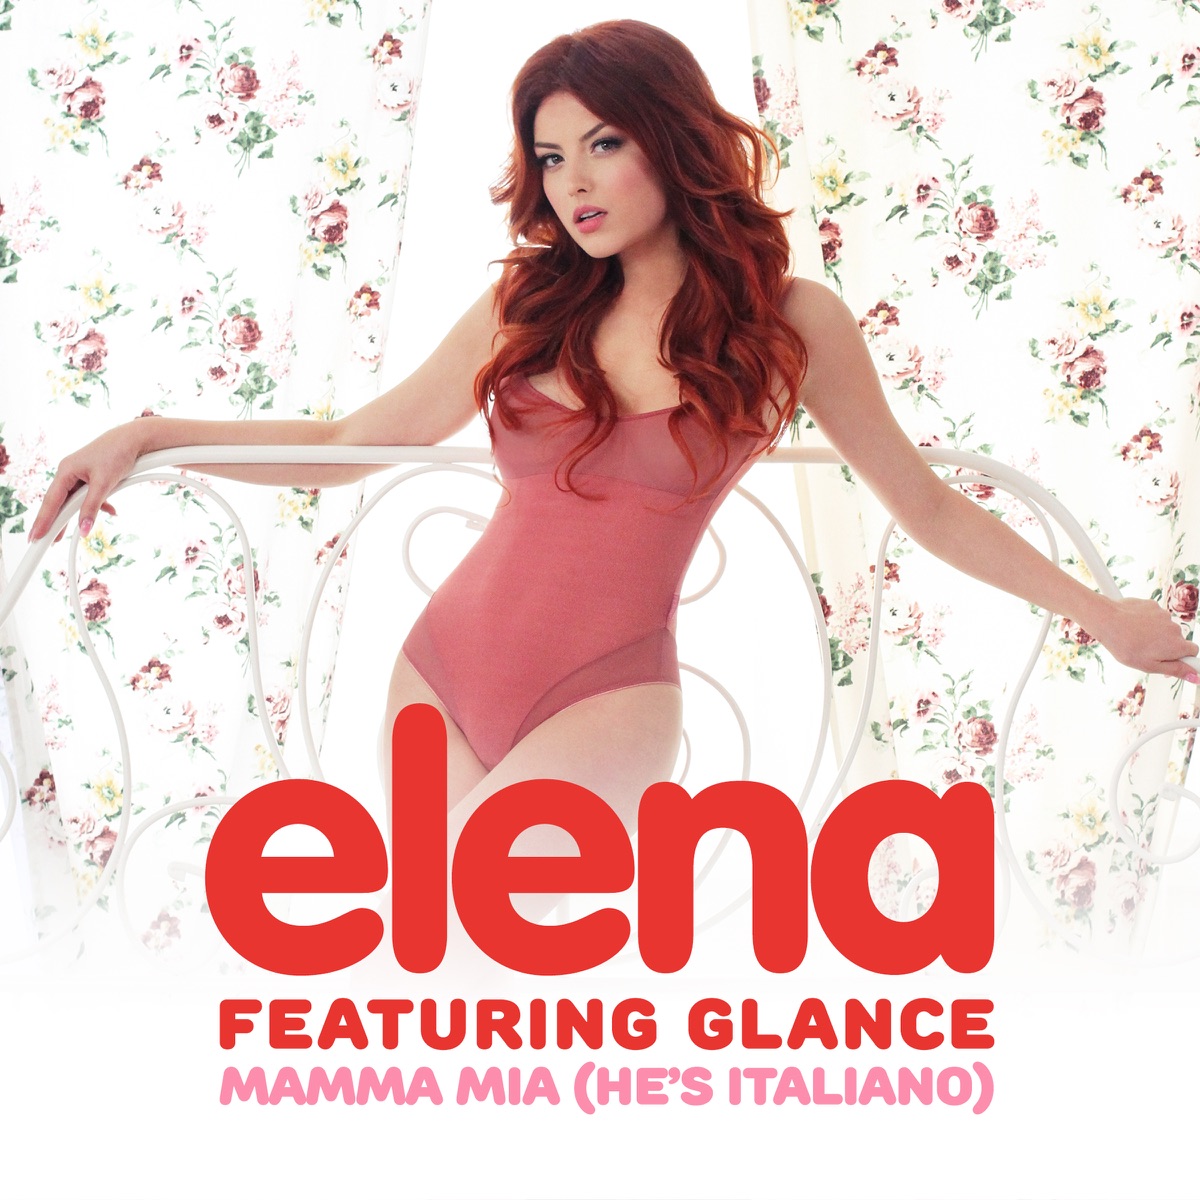 Mamma Mia (He's Italiano) [feat. Glance] - EP by Elena on Apple Music